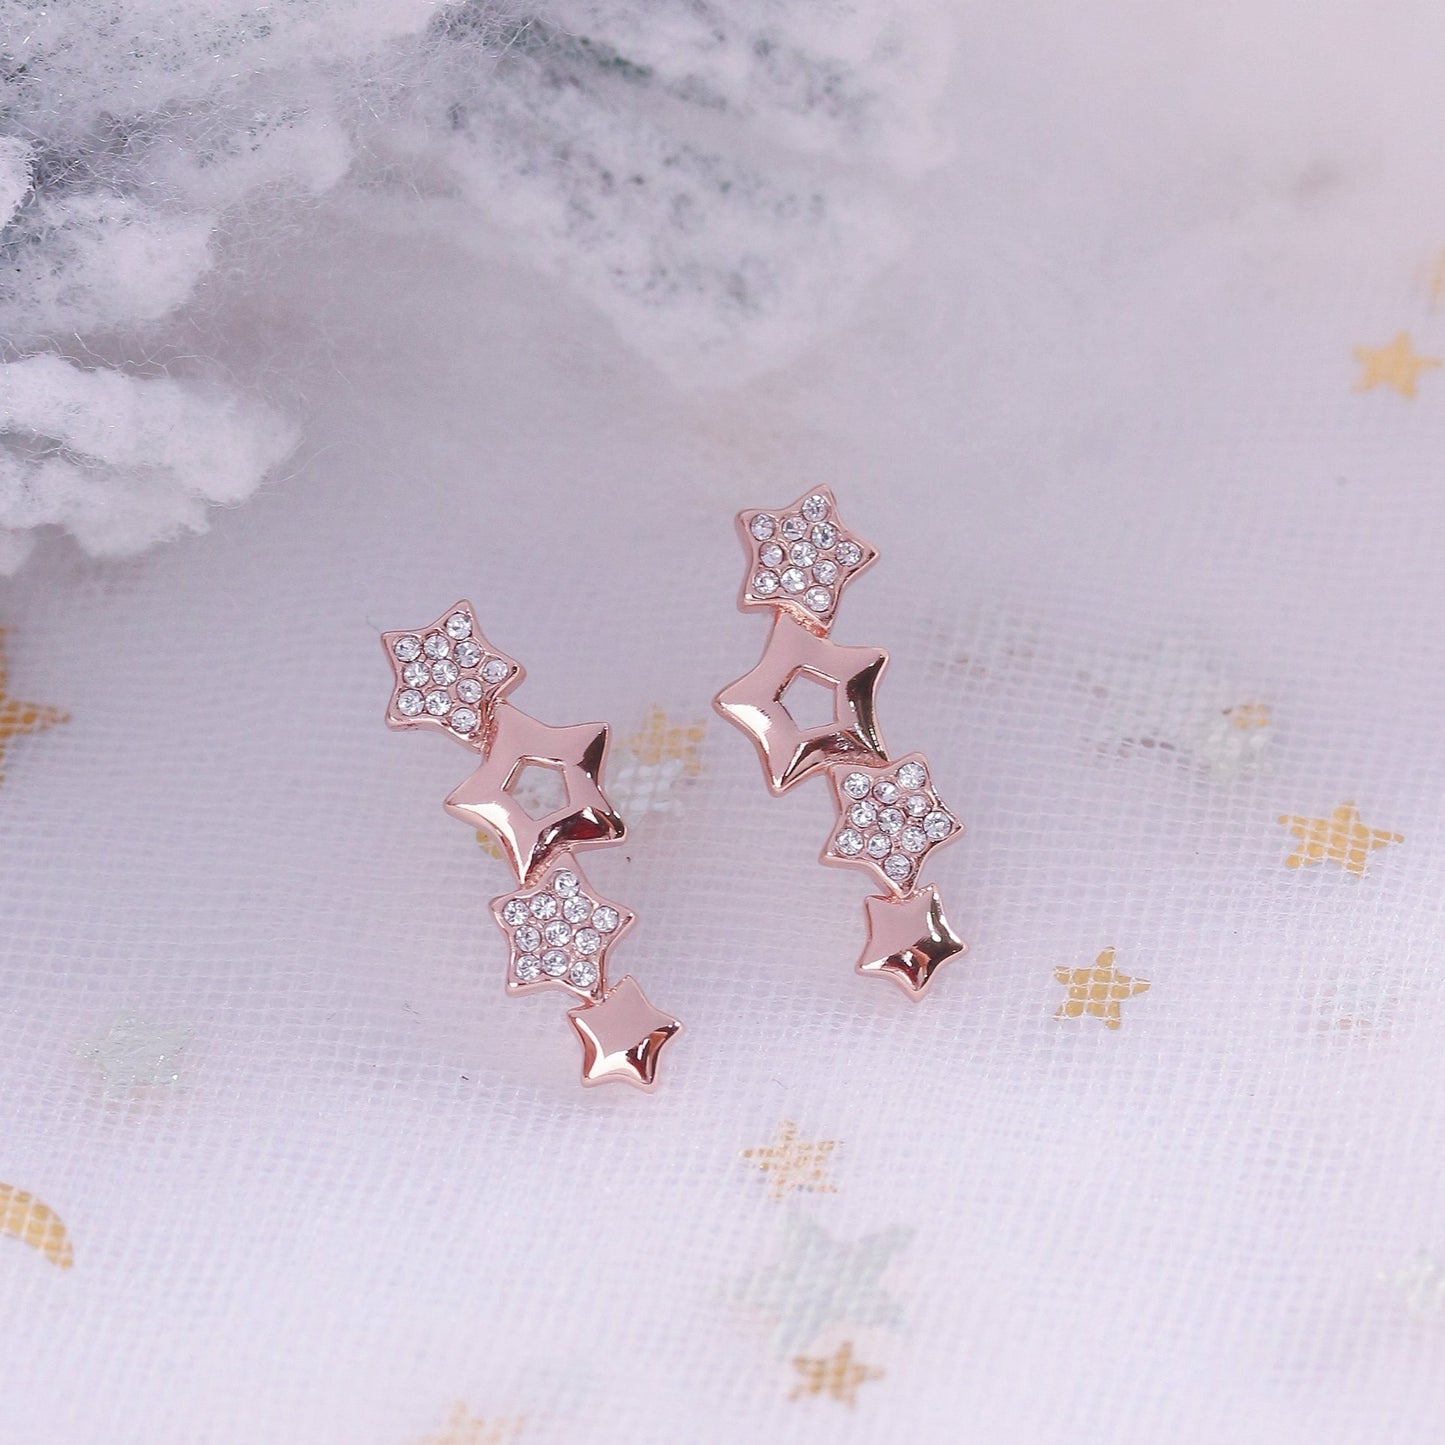 4 Stars Earrings